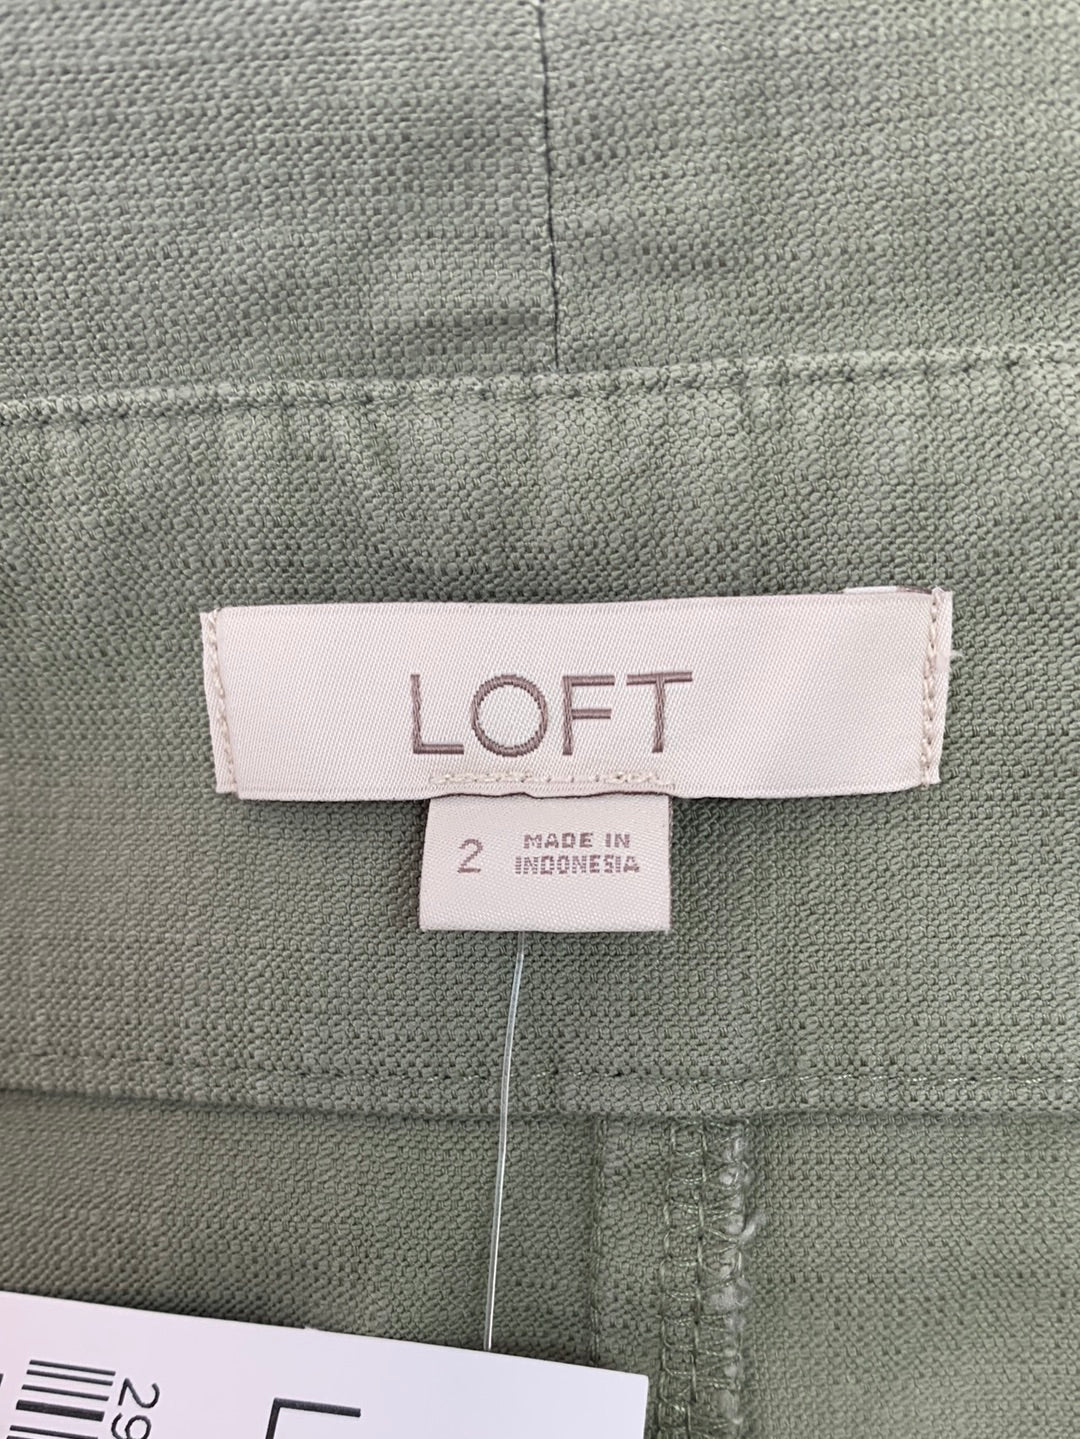 NWT - LOFT olive green Belted High Waist Paper Bag Cargo Skirt - 2